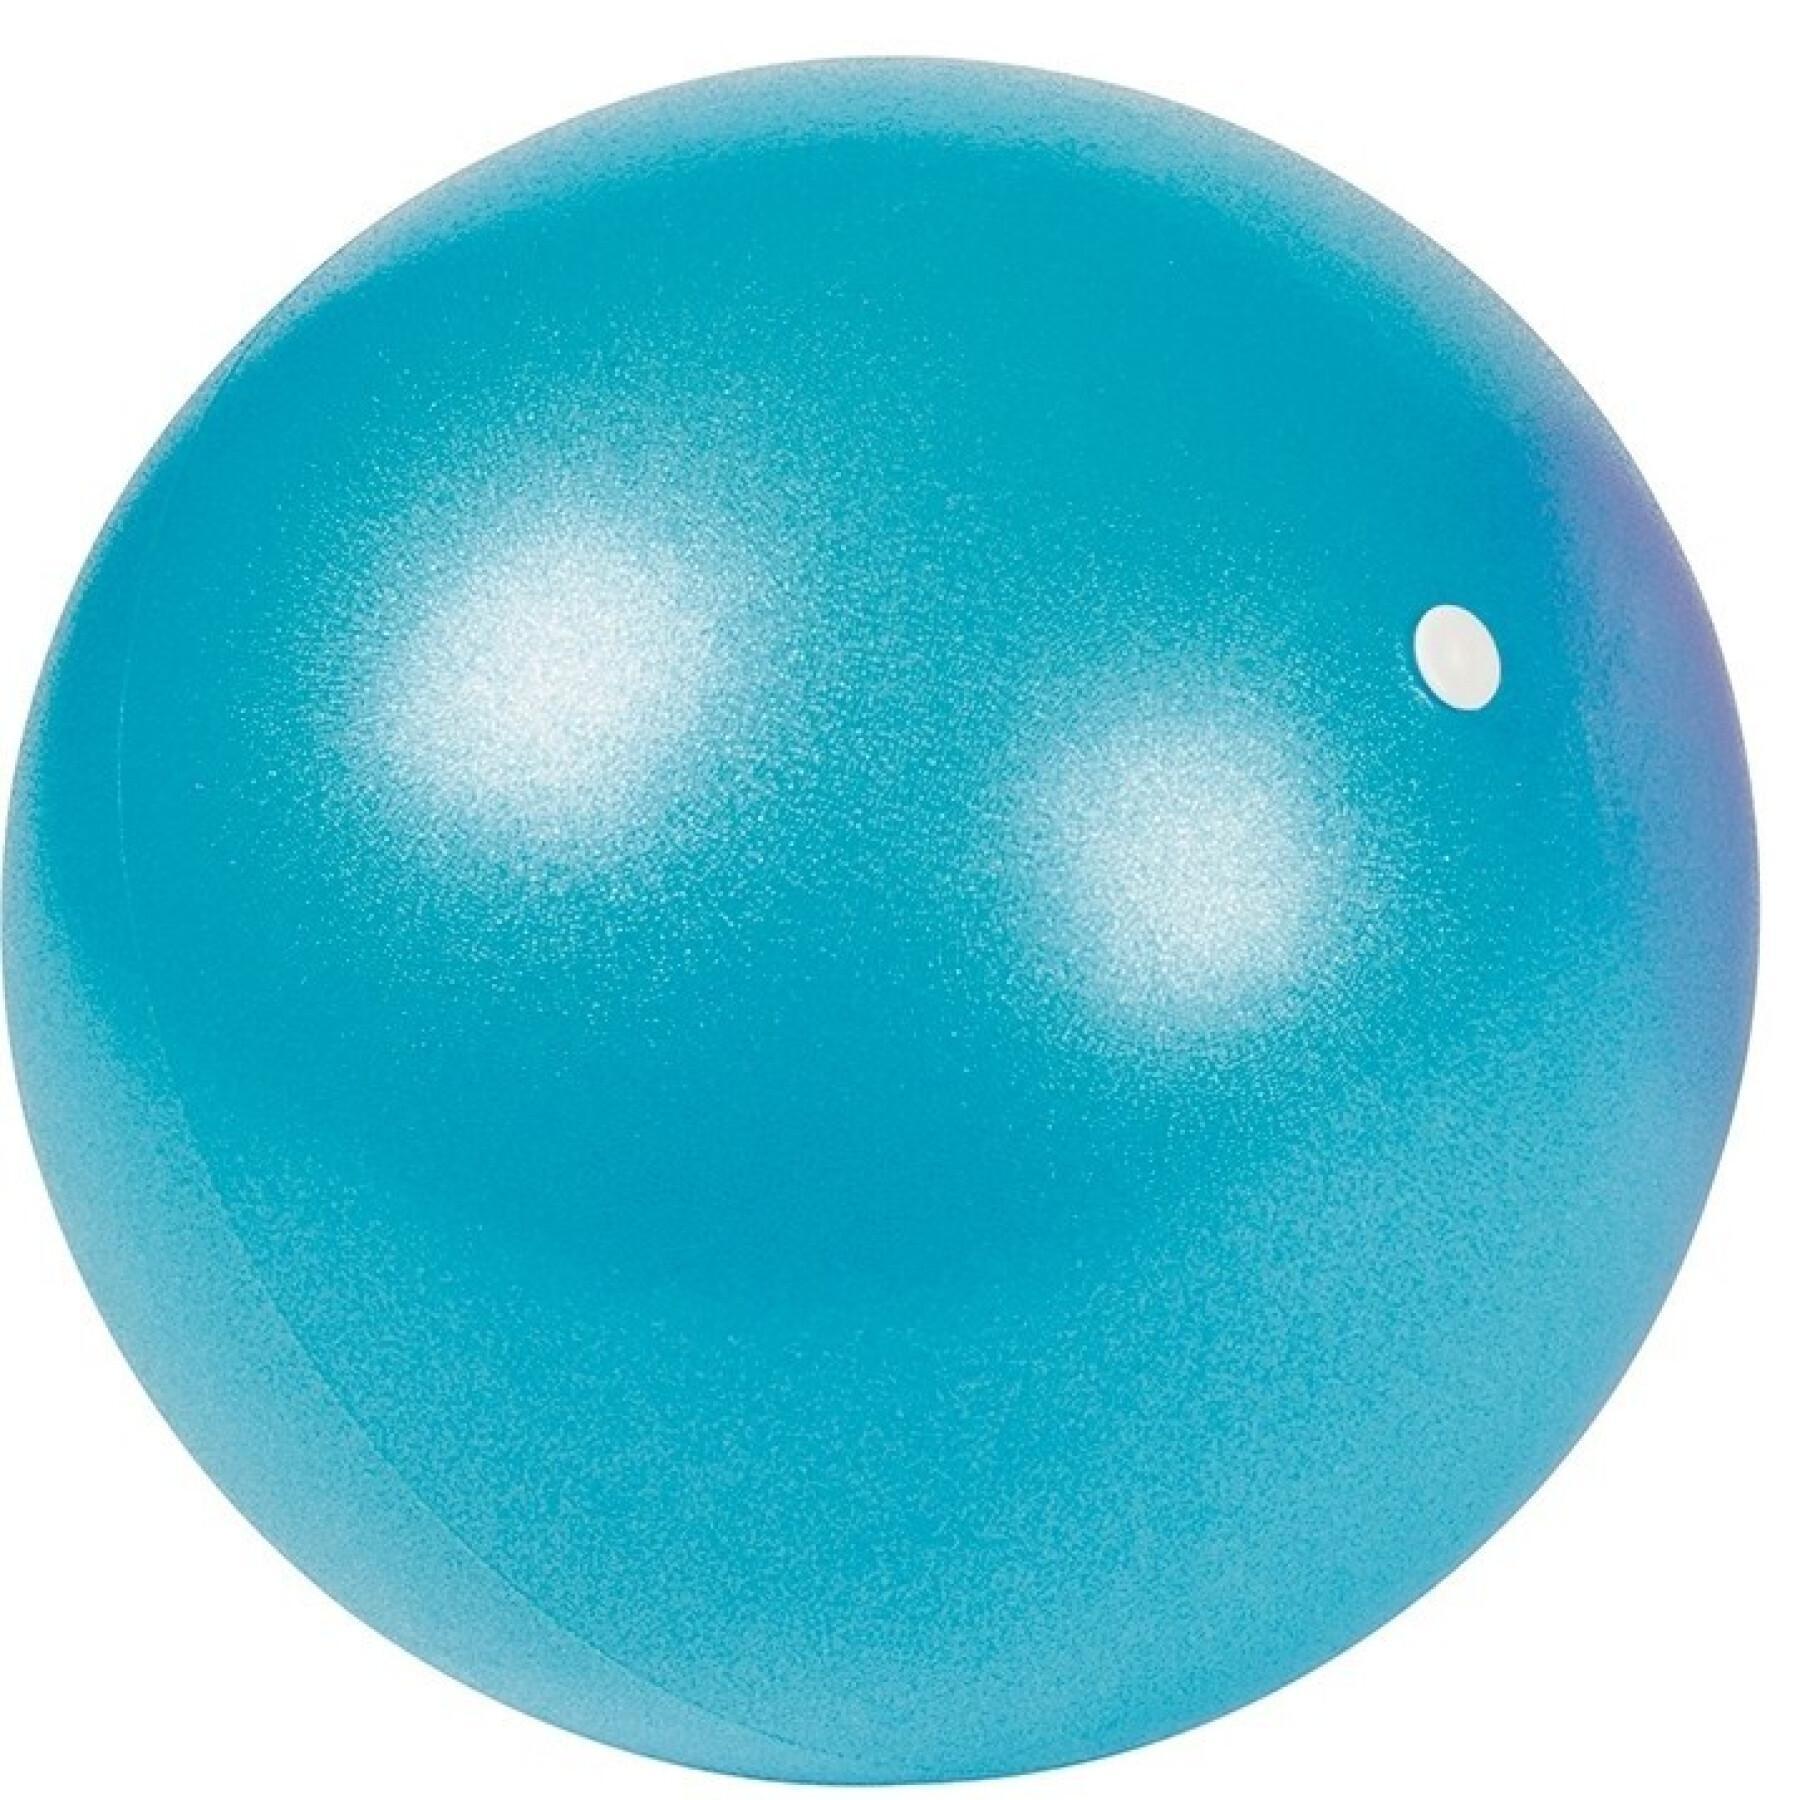 Ballon Megaform Mini Stability